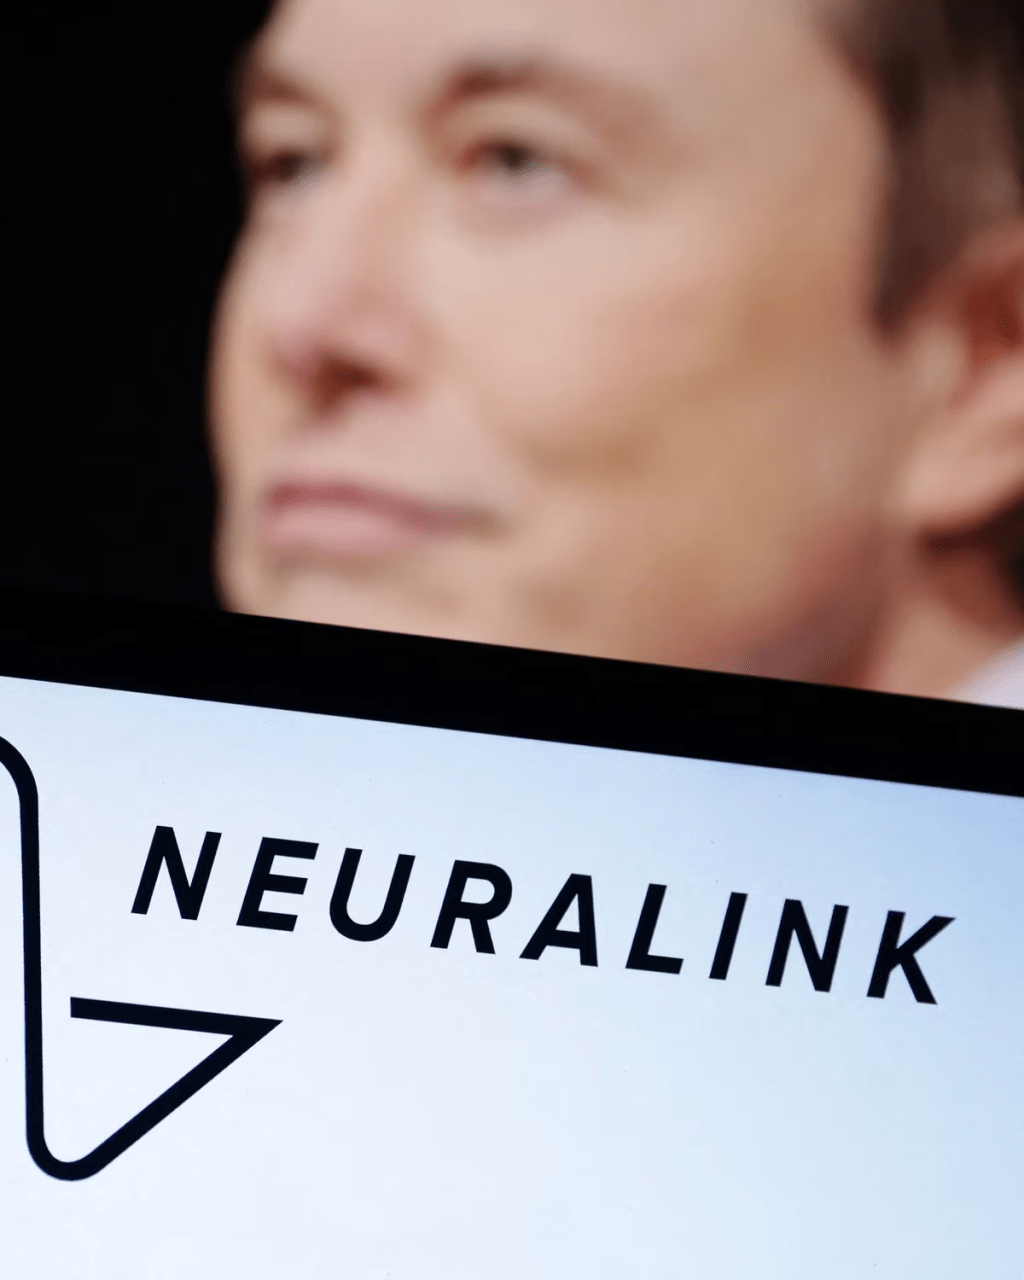 Neuralink是马斯克旗下的大脑晶片科技公司。路透社